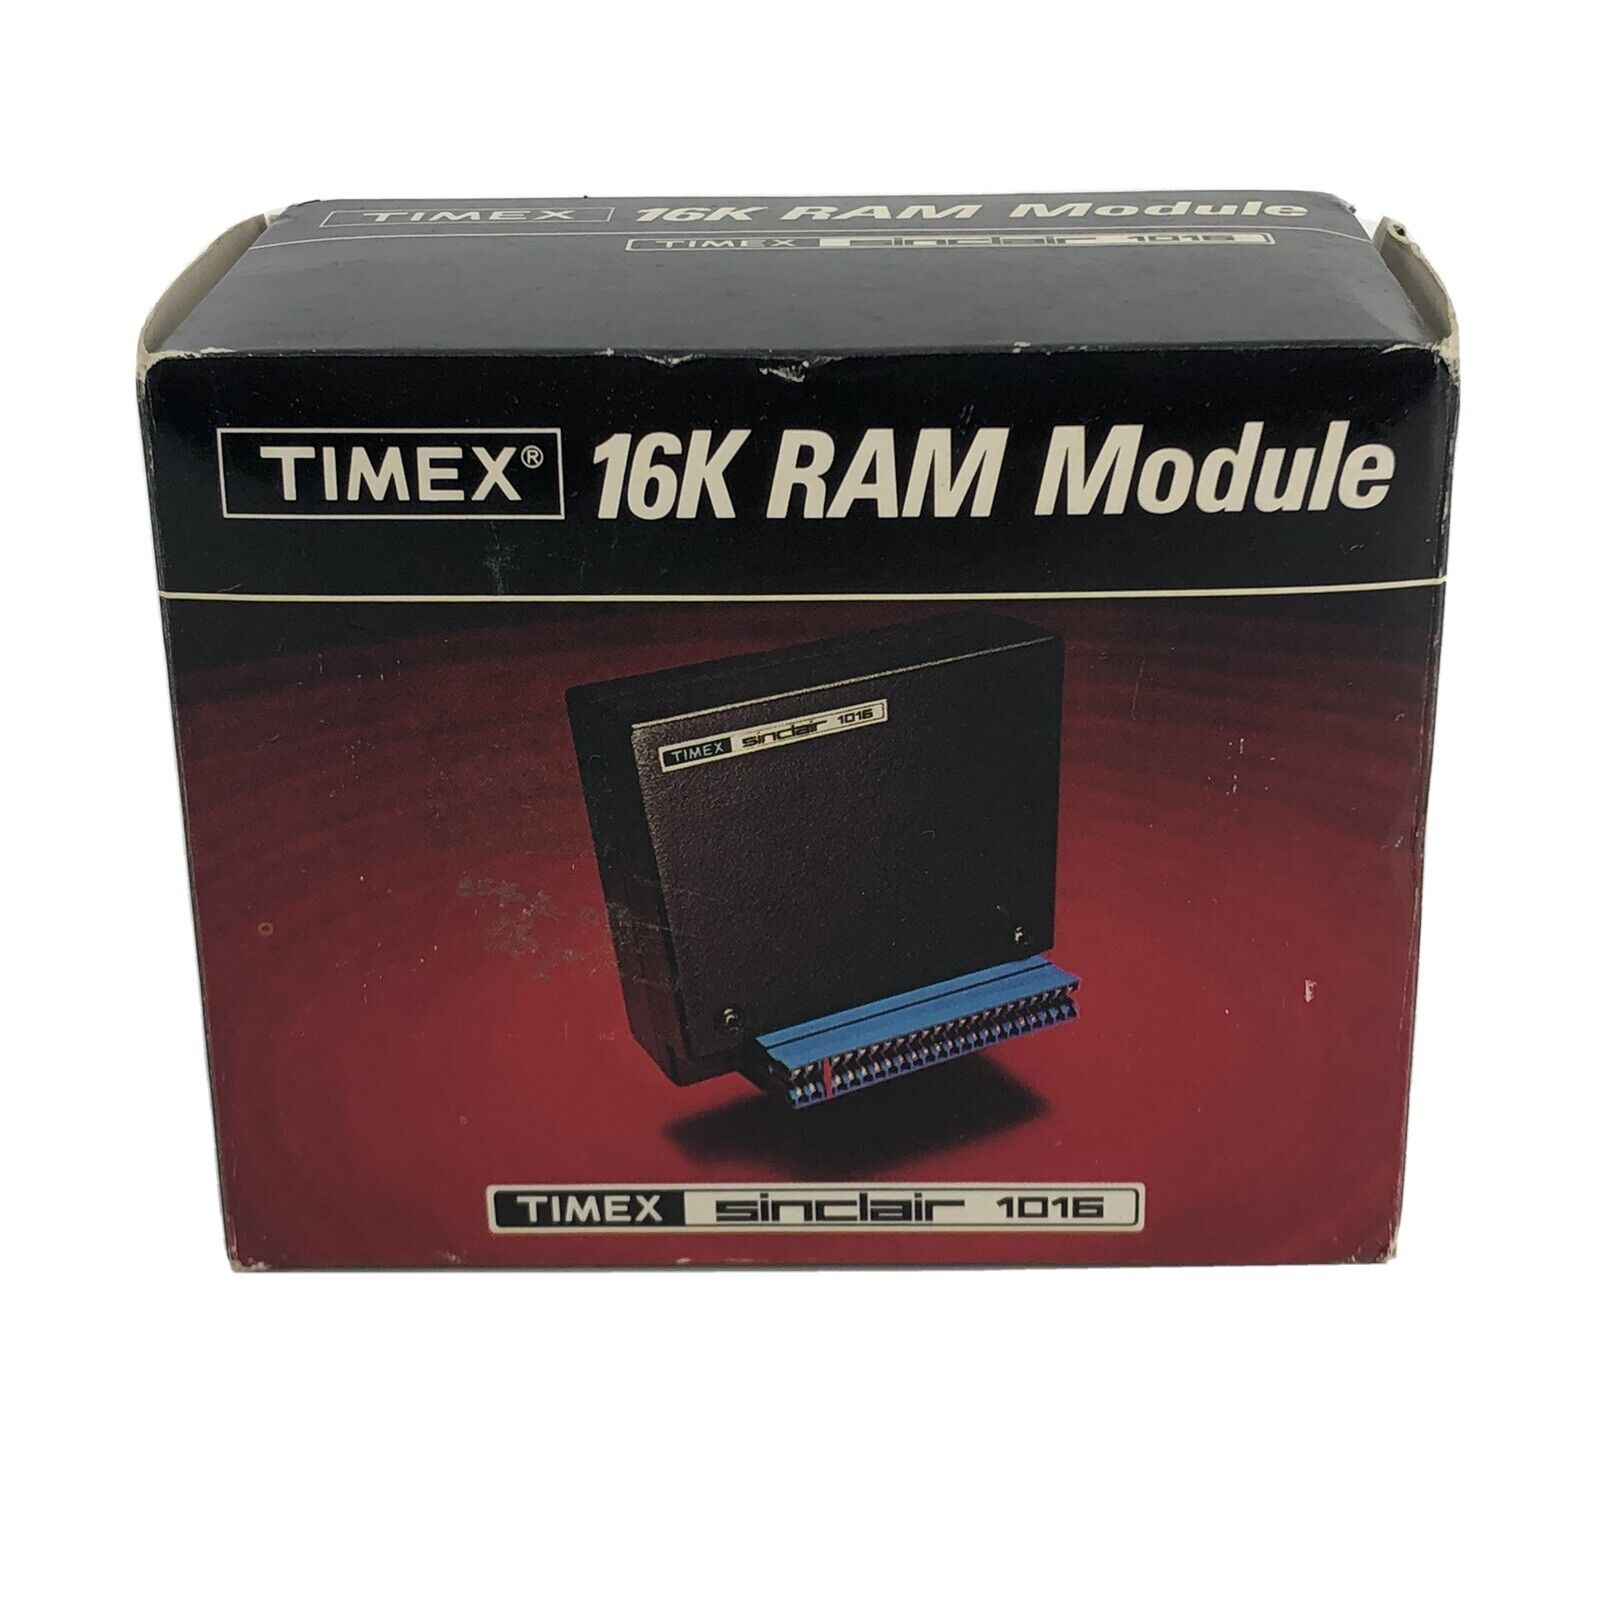 Timex Sinclair 1016 16K RAM Module Cartridge Original Box NEW OLD STOCK